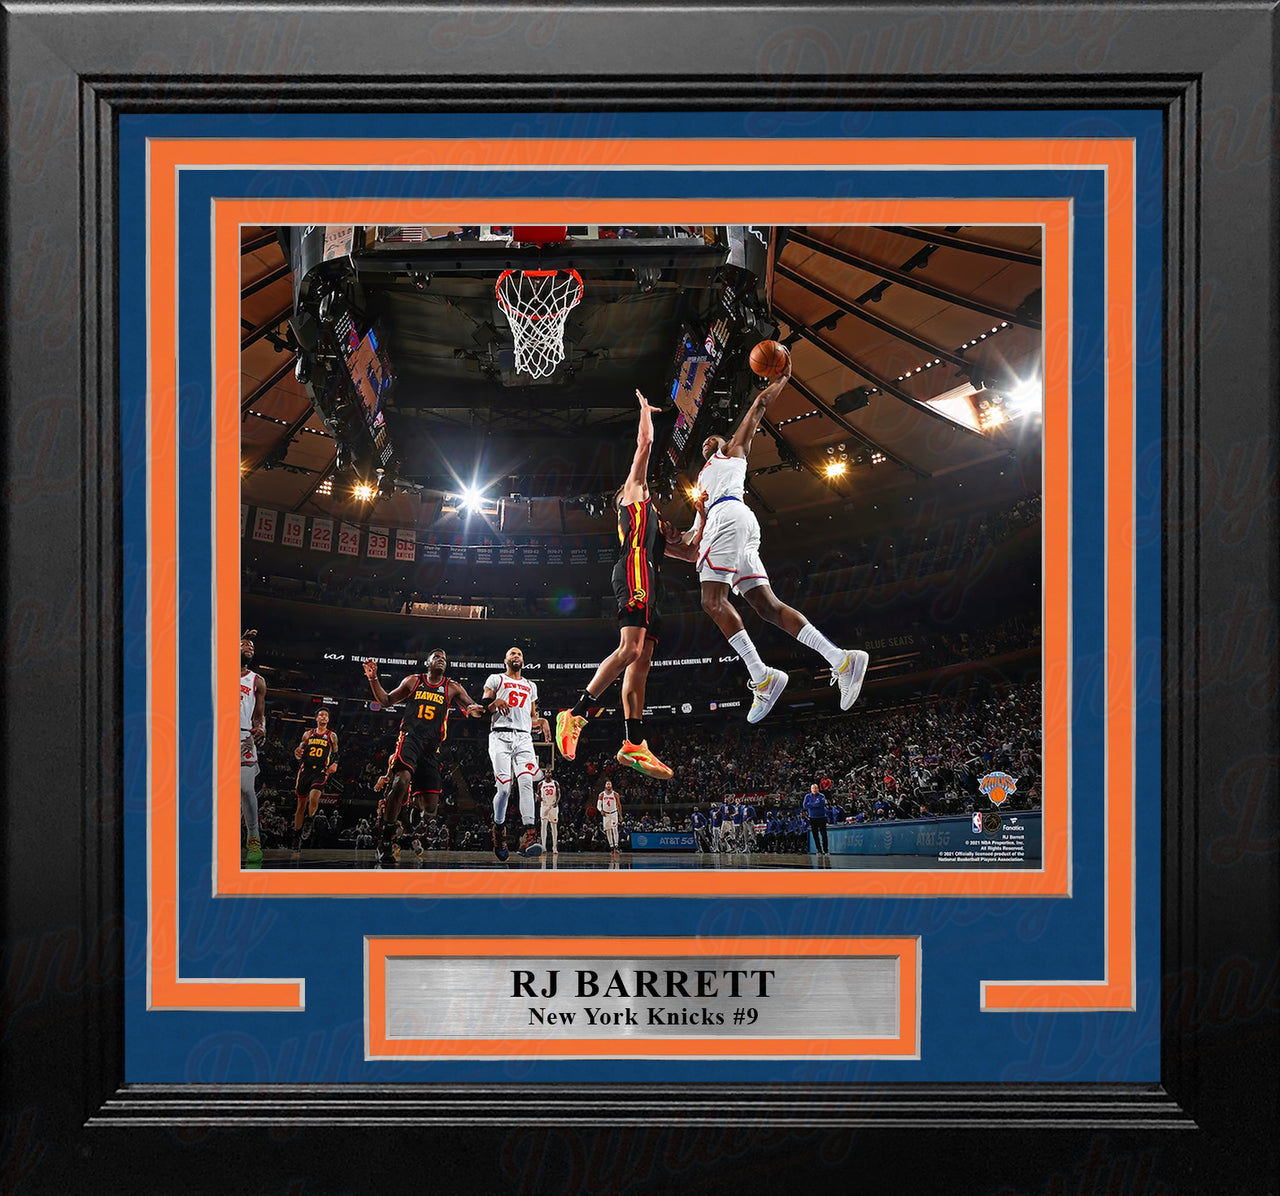 RJ Barrett Slam Dunk New York Knicks 8" x 10" Framed Basketball Photo - Dynasty Sports & Framing 